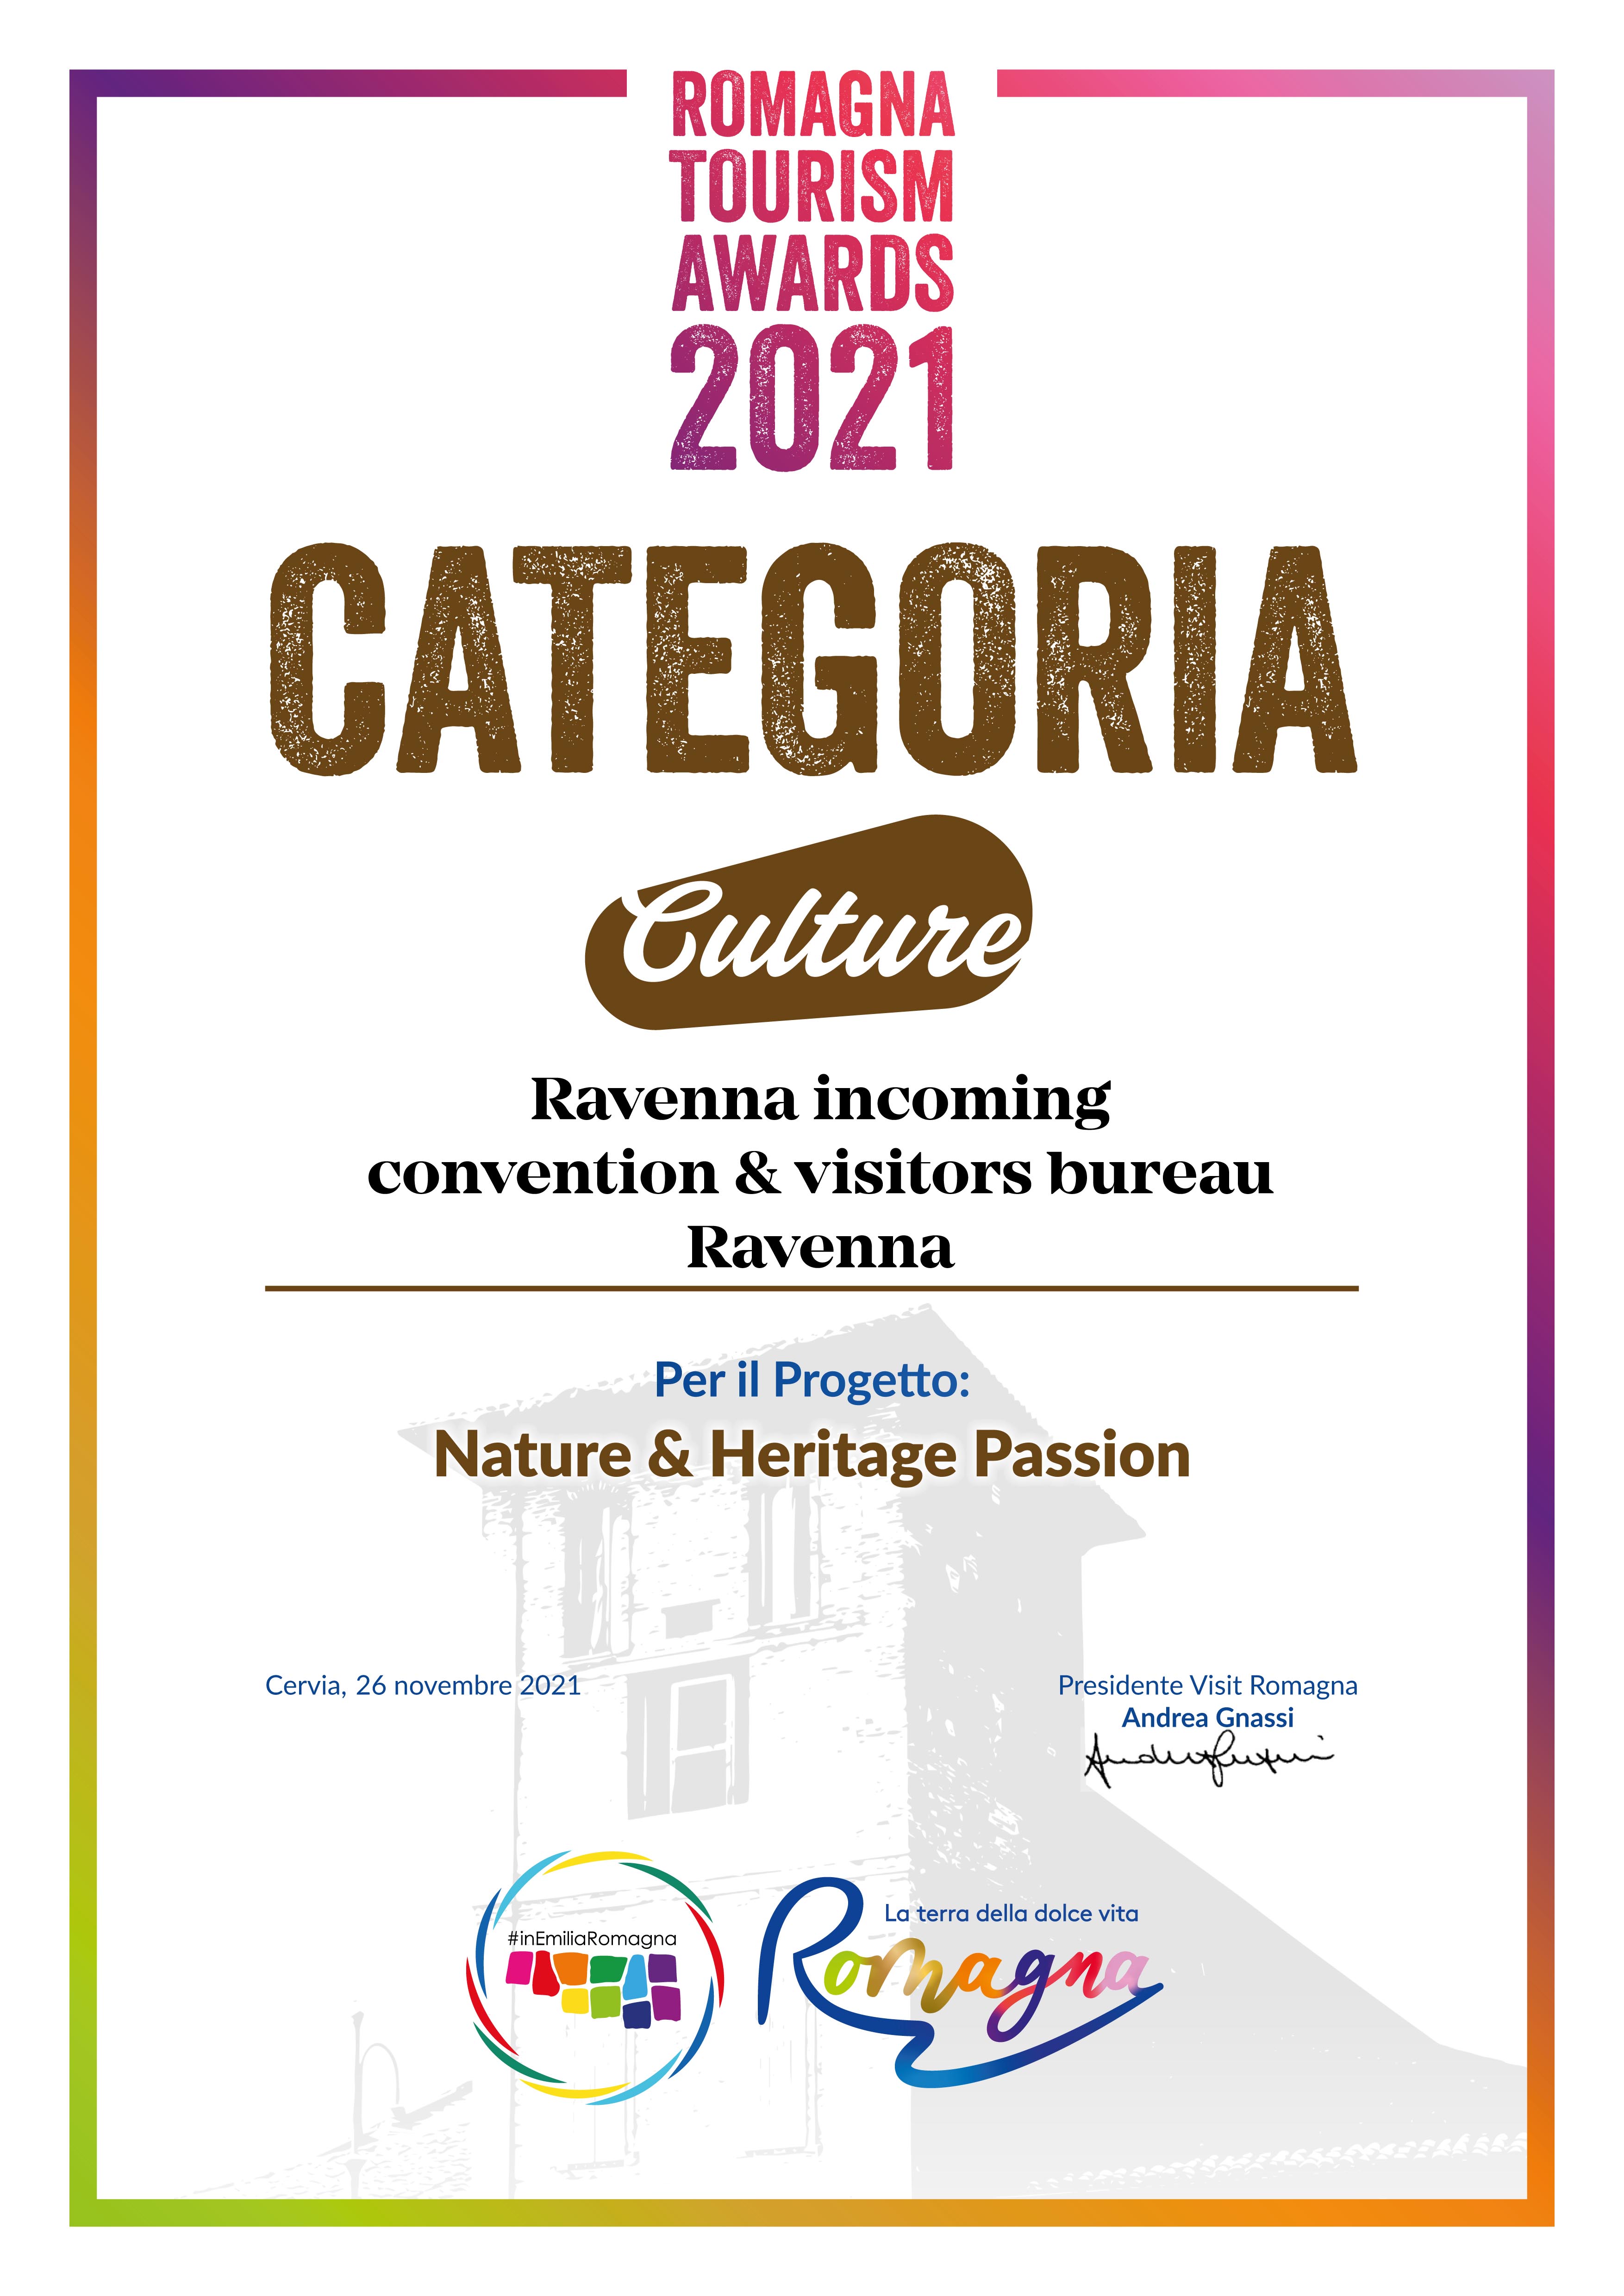 Ravenna incoming convention & visitors bureau Ravenna